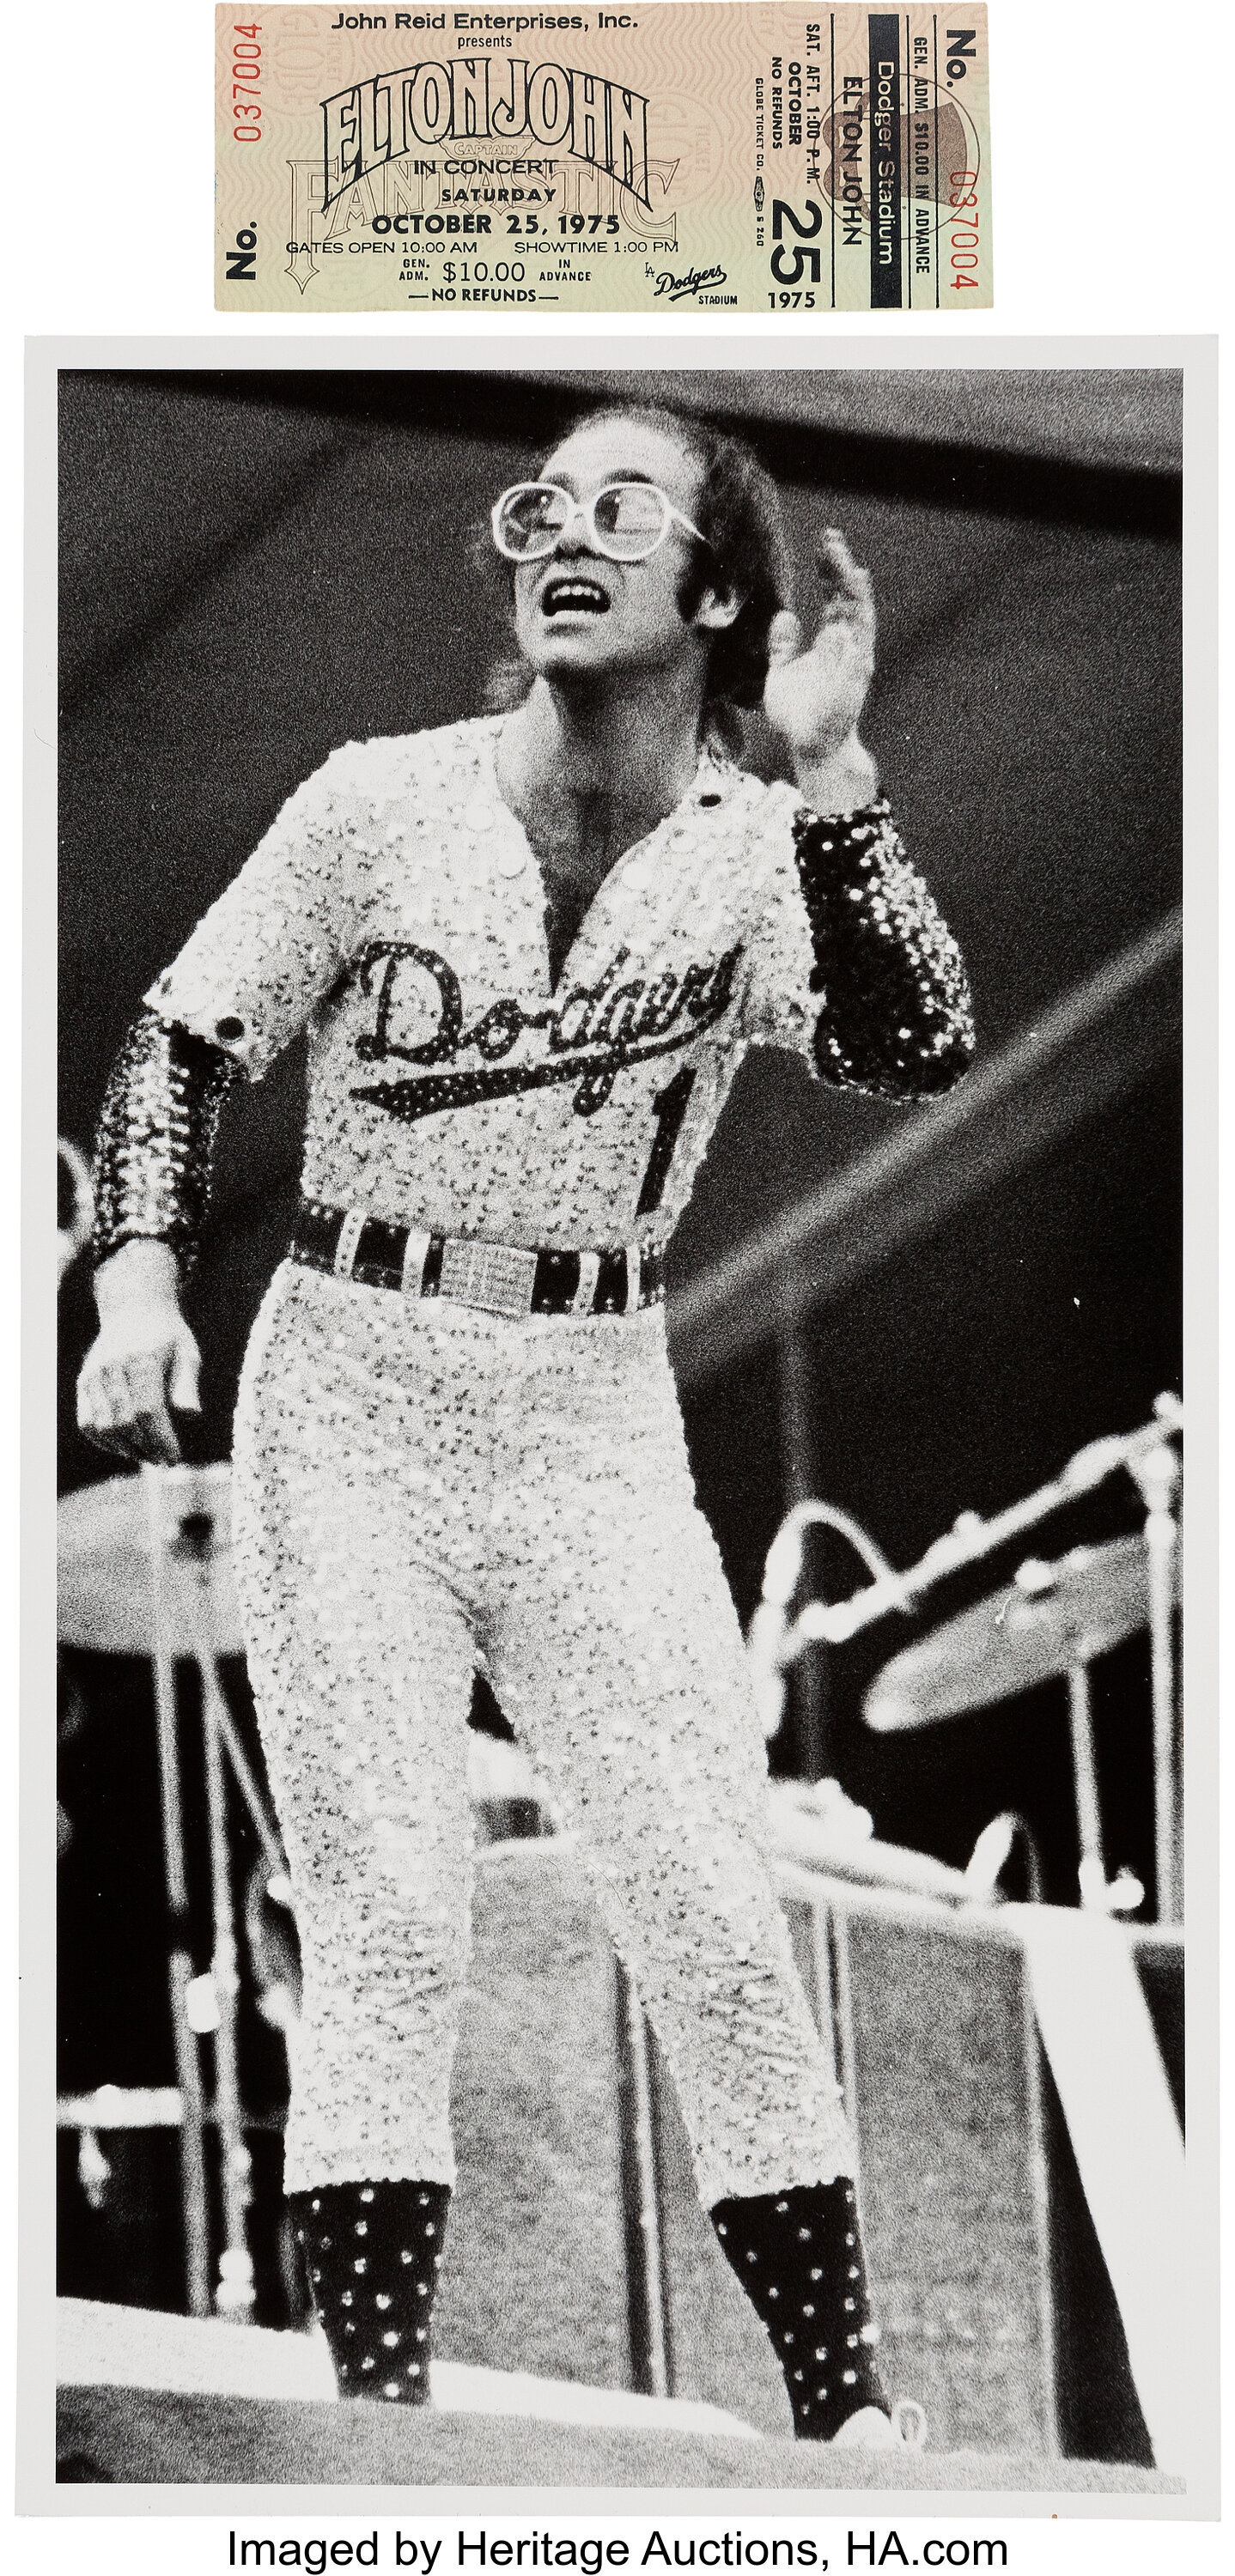 Elton John's epic 1975 concert at the Dodger Stadium